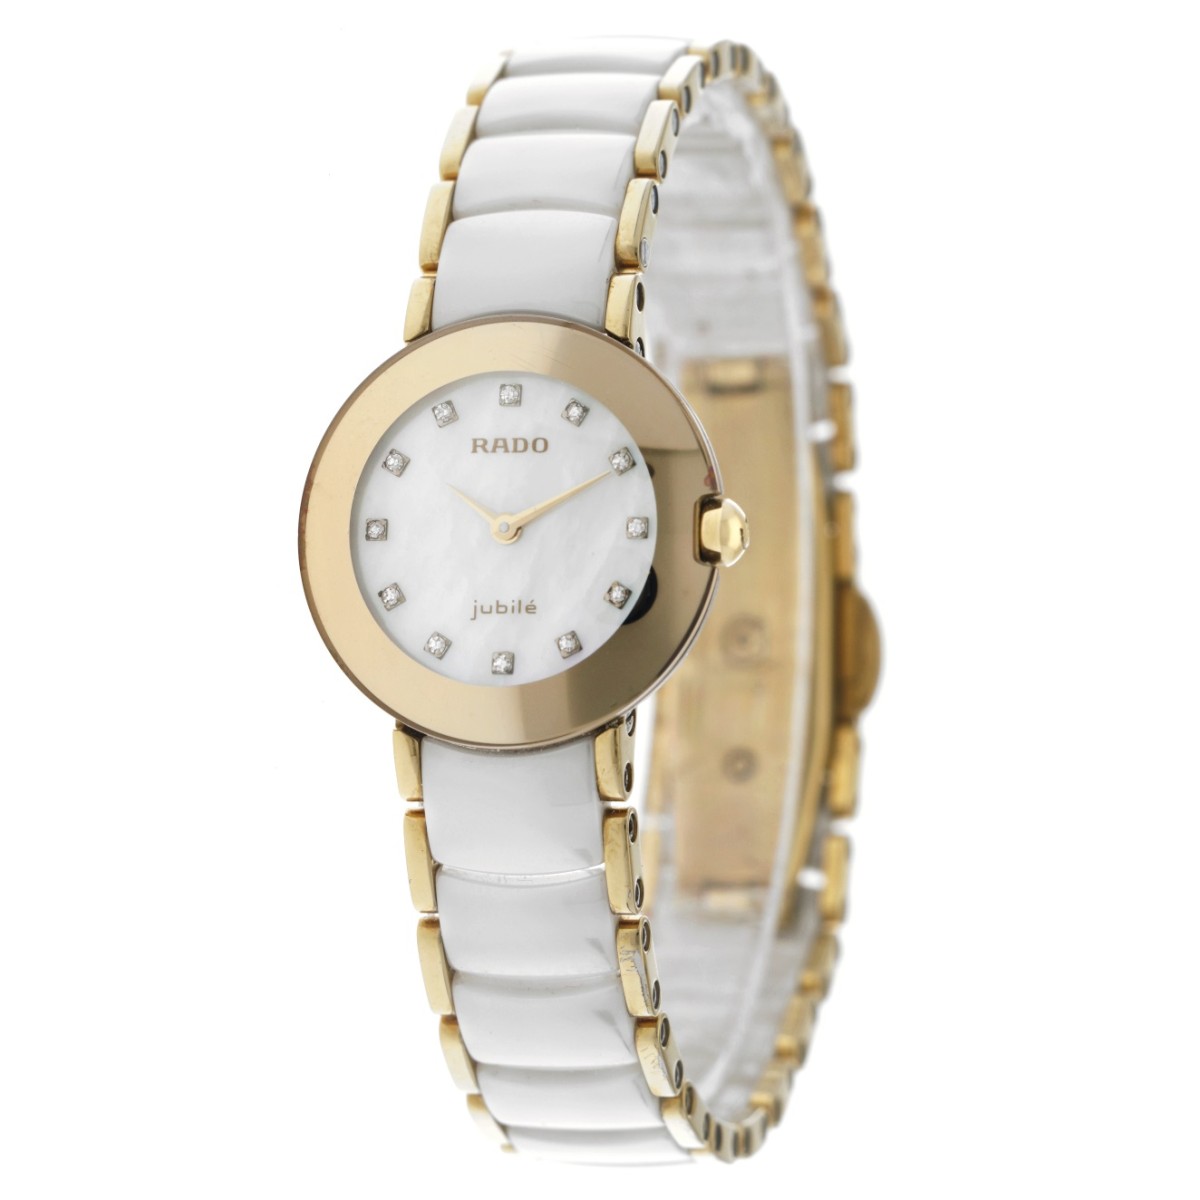 Rado Jubilé Limited Series 153.0331.3 - Ladies watch - Image 2 of 6